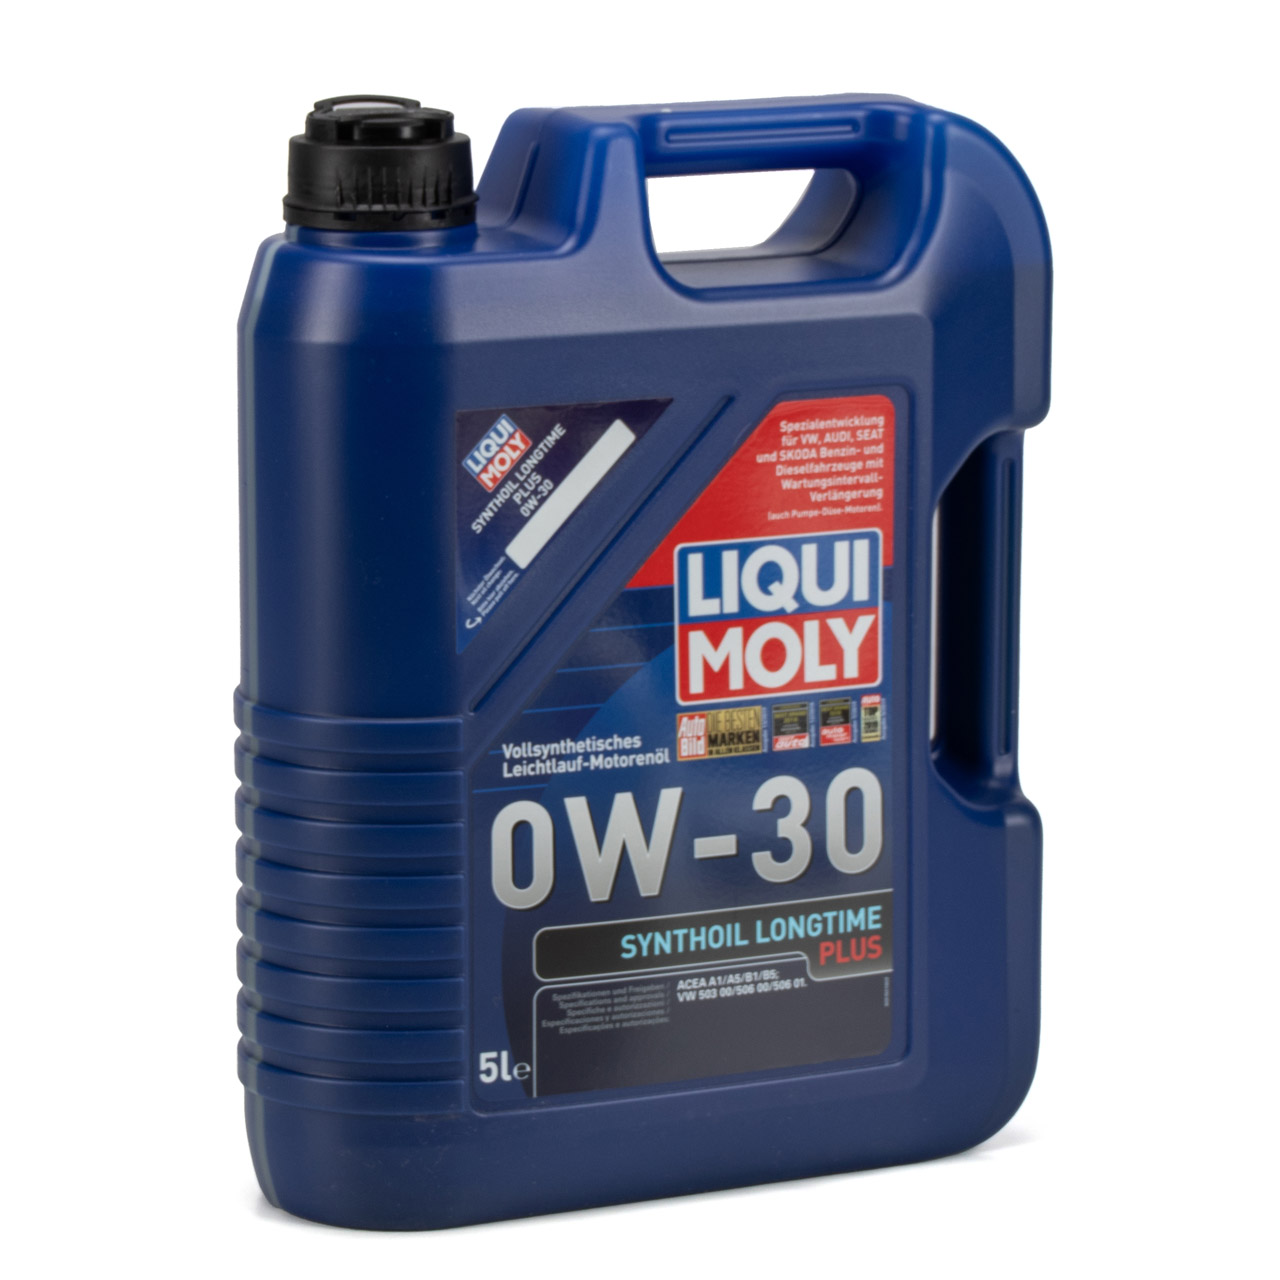 LIQUI MOLY SYNTHOIL LONGTIME PLUS Motoröl Öl 0W30 VW 503/506.00 - 5L 5 Liter